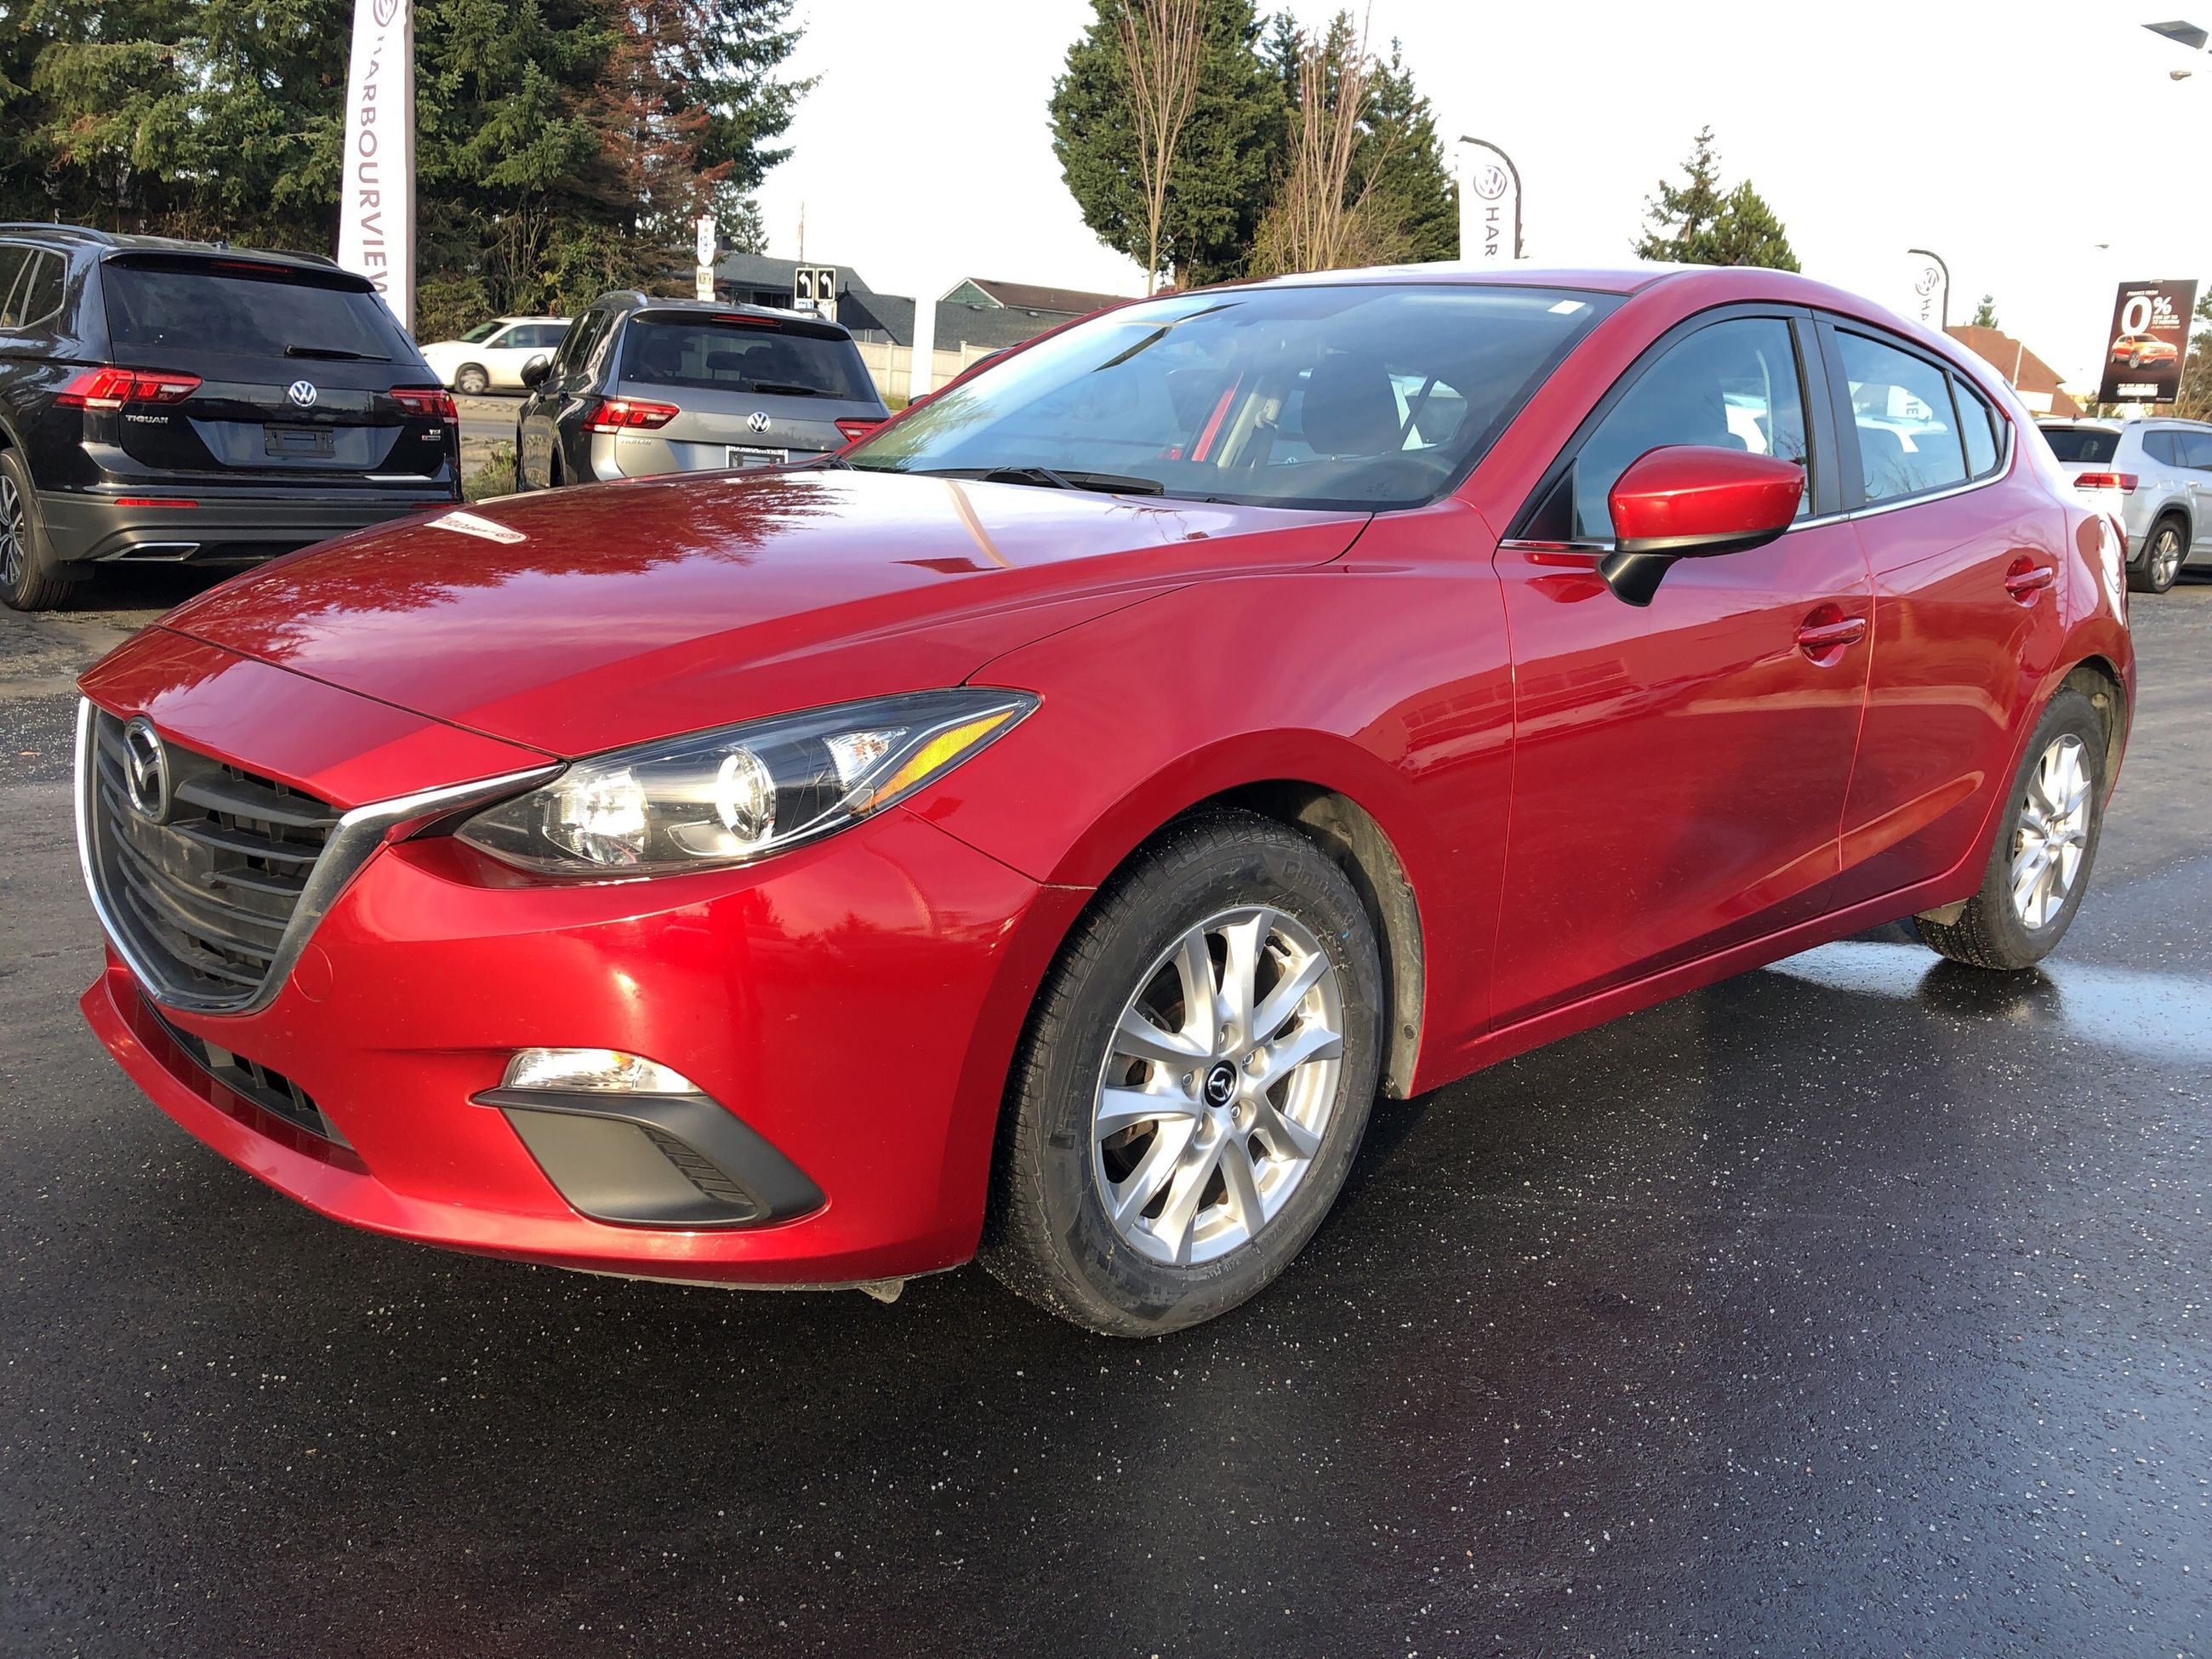 Used 2015 Mazda Mazda3 Sport Hatchback 6spd for Sale - $12995 ...